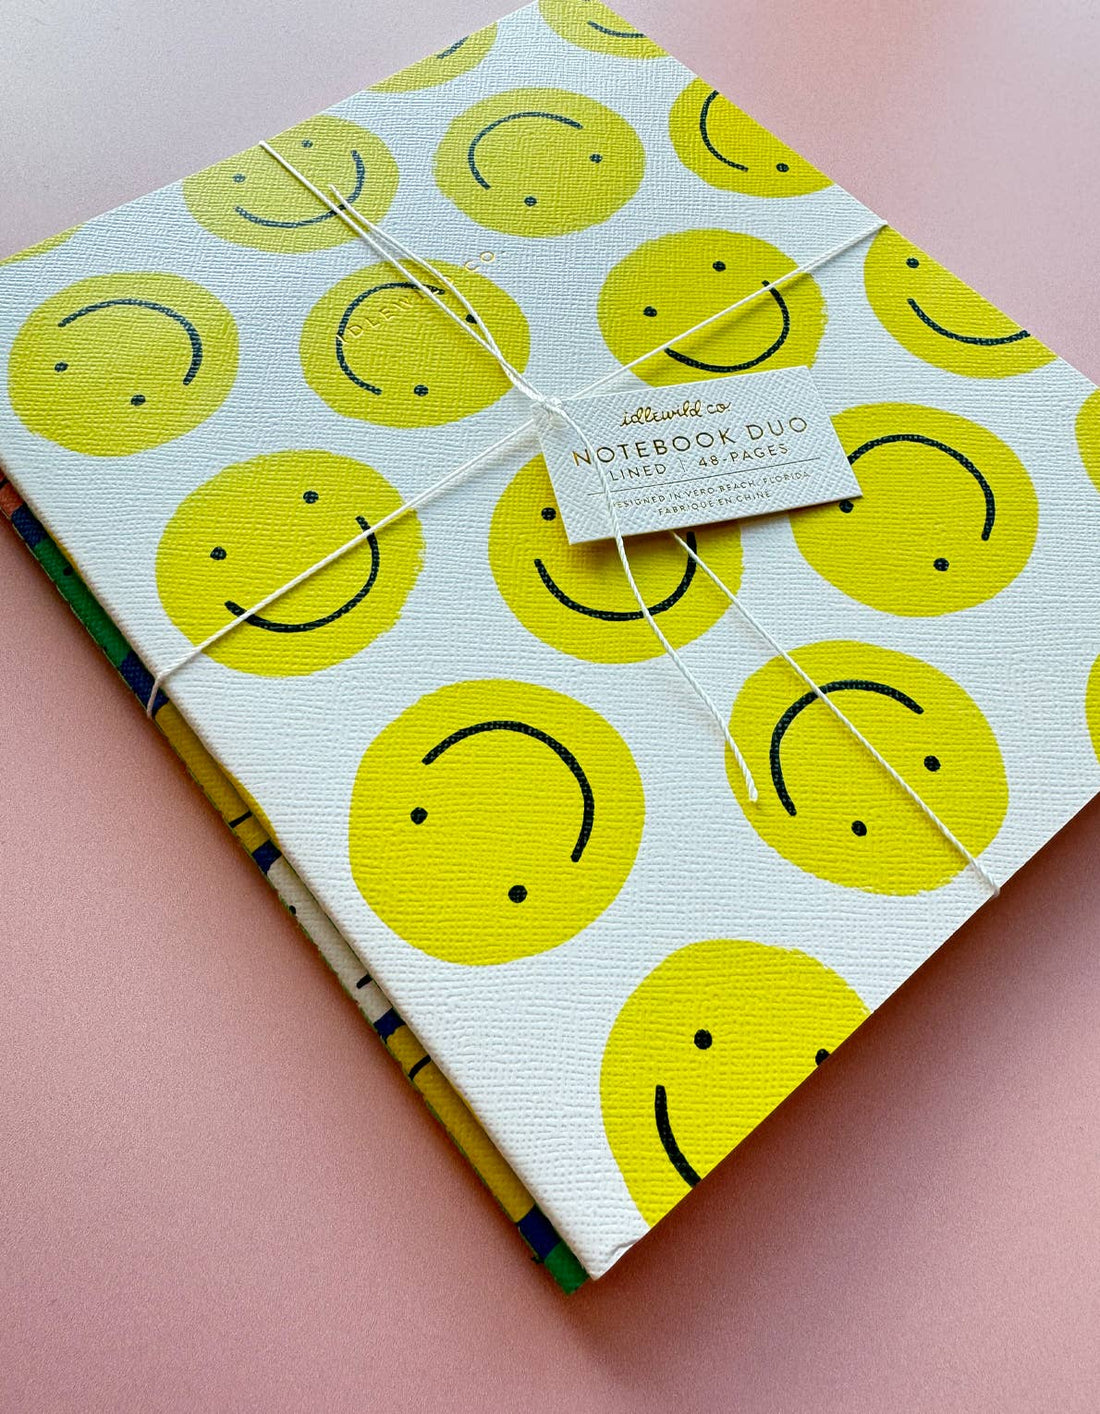 Smiley Notebook Duo